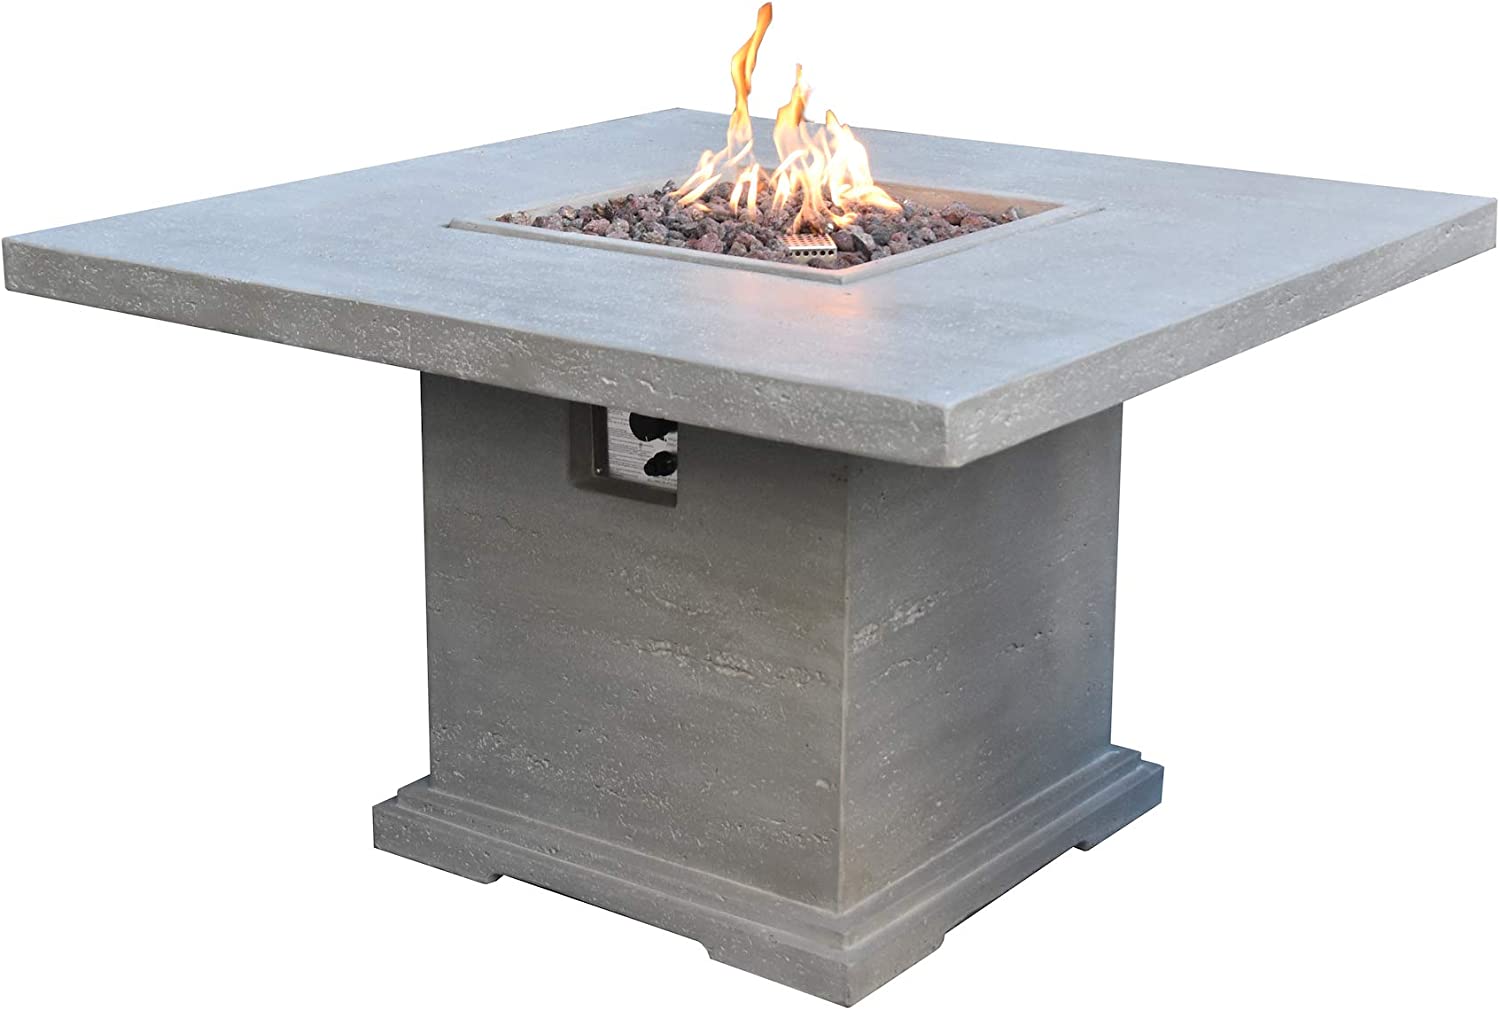 Elementi Birmingham Dining Fire Table (Propane) - Light Grey